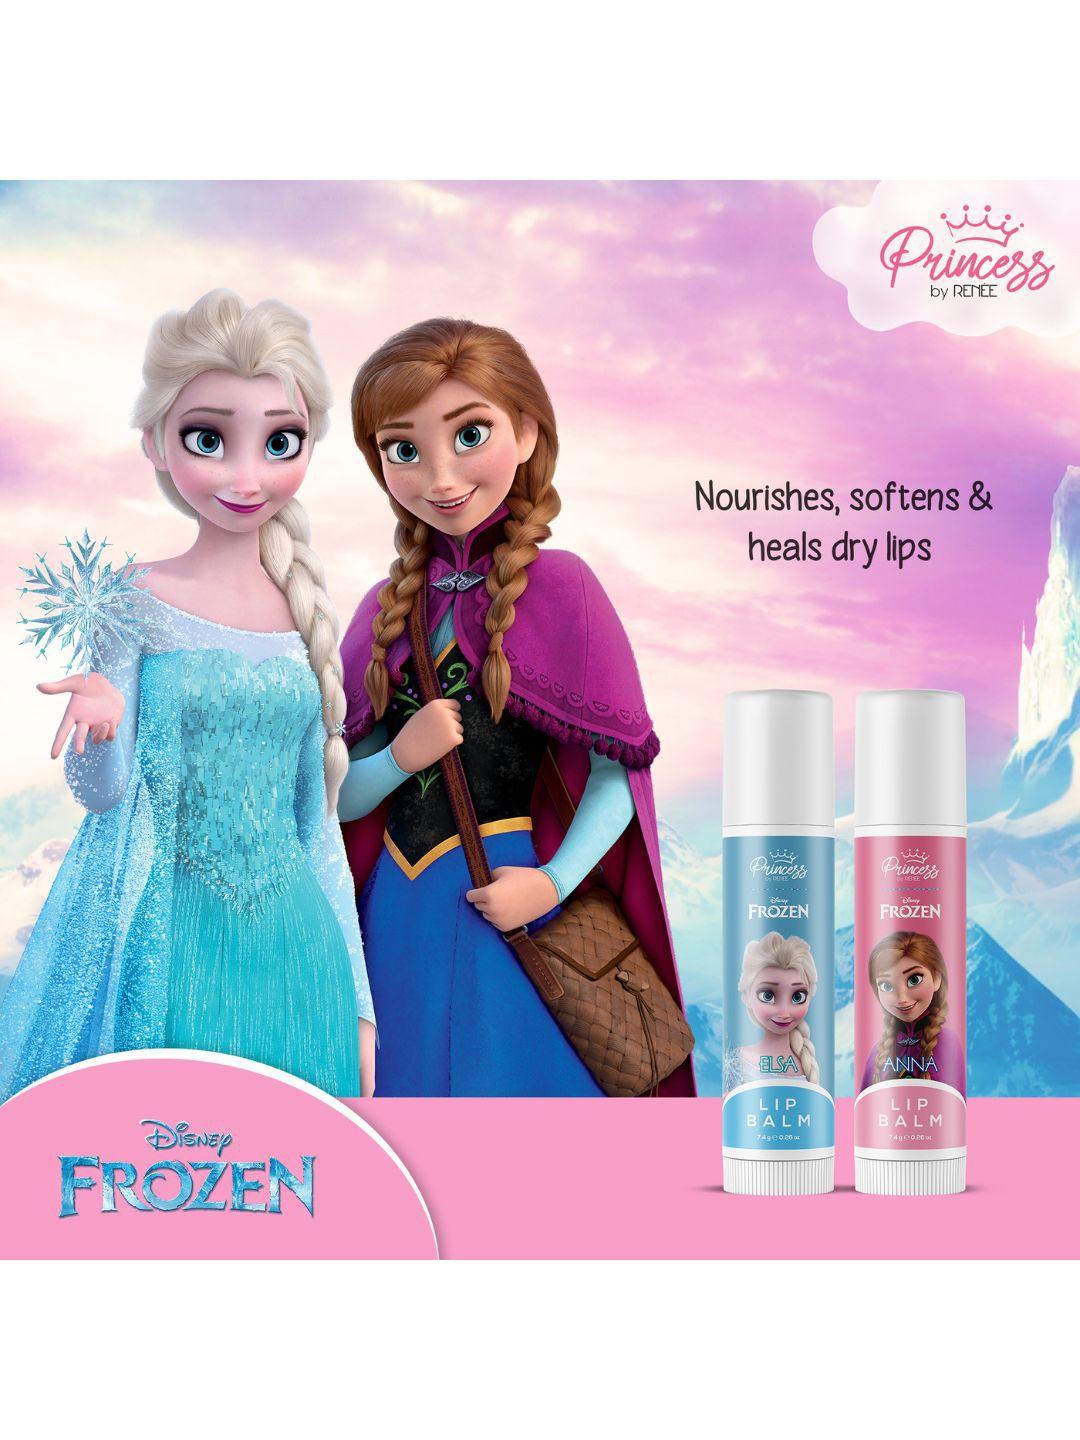 renee set of 2 princess disney frozen tinted lip balm 7.4g each - elsa & anna